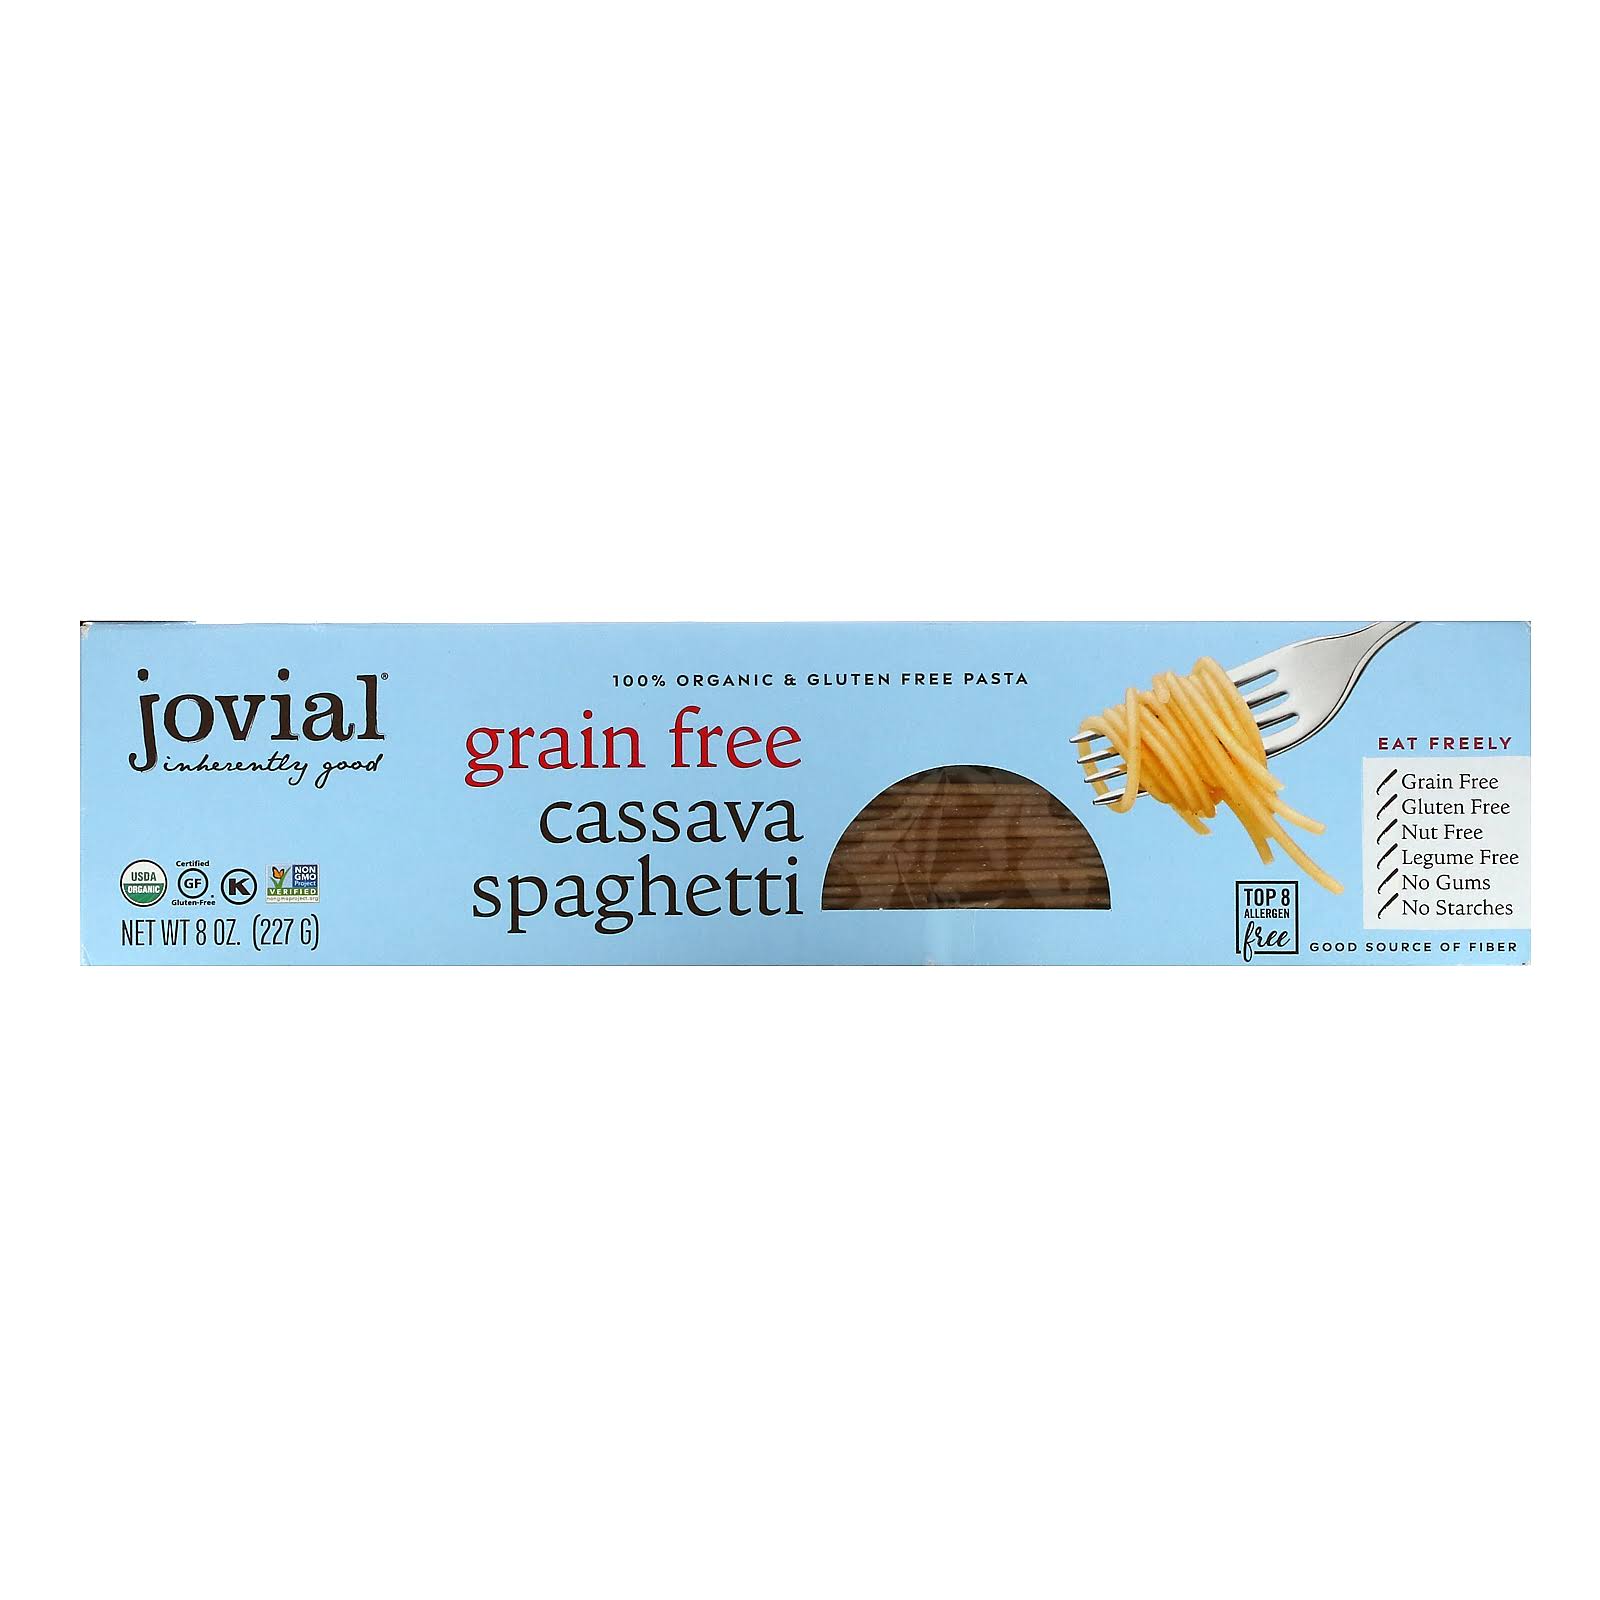 Jovial Pasta, Cassava Spaghetti, Grain Free - 8 oz